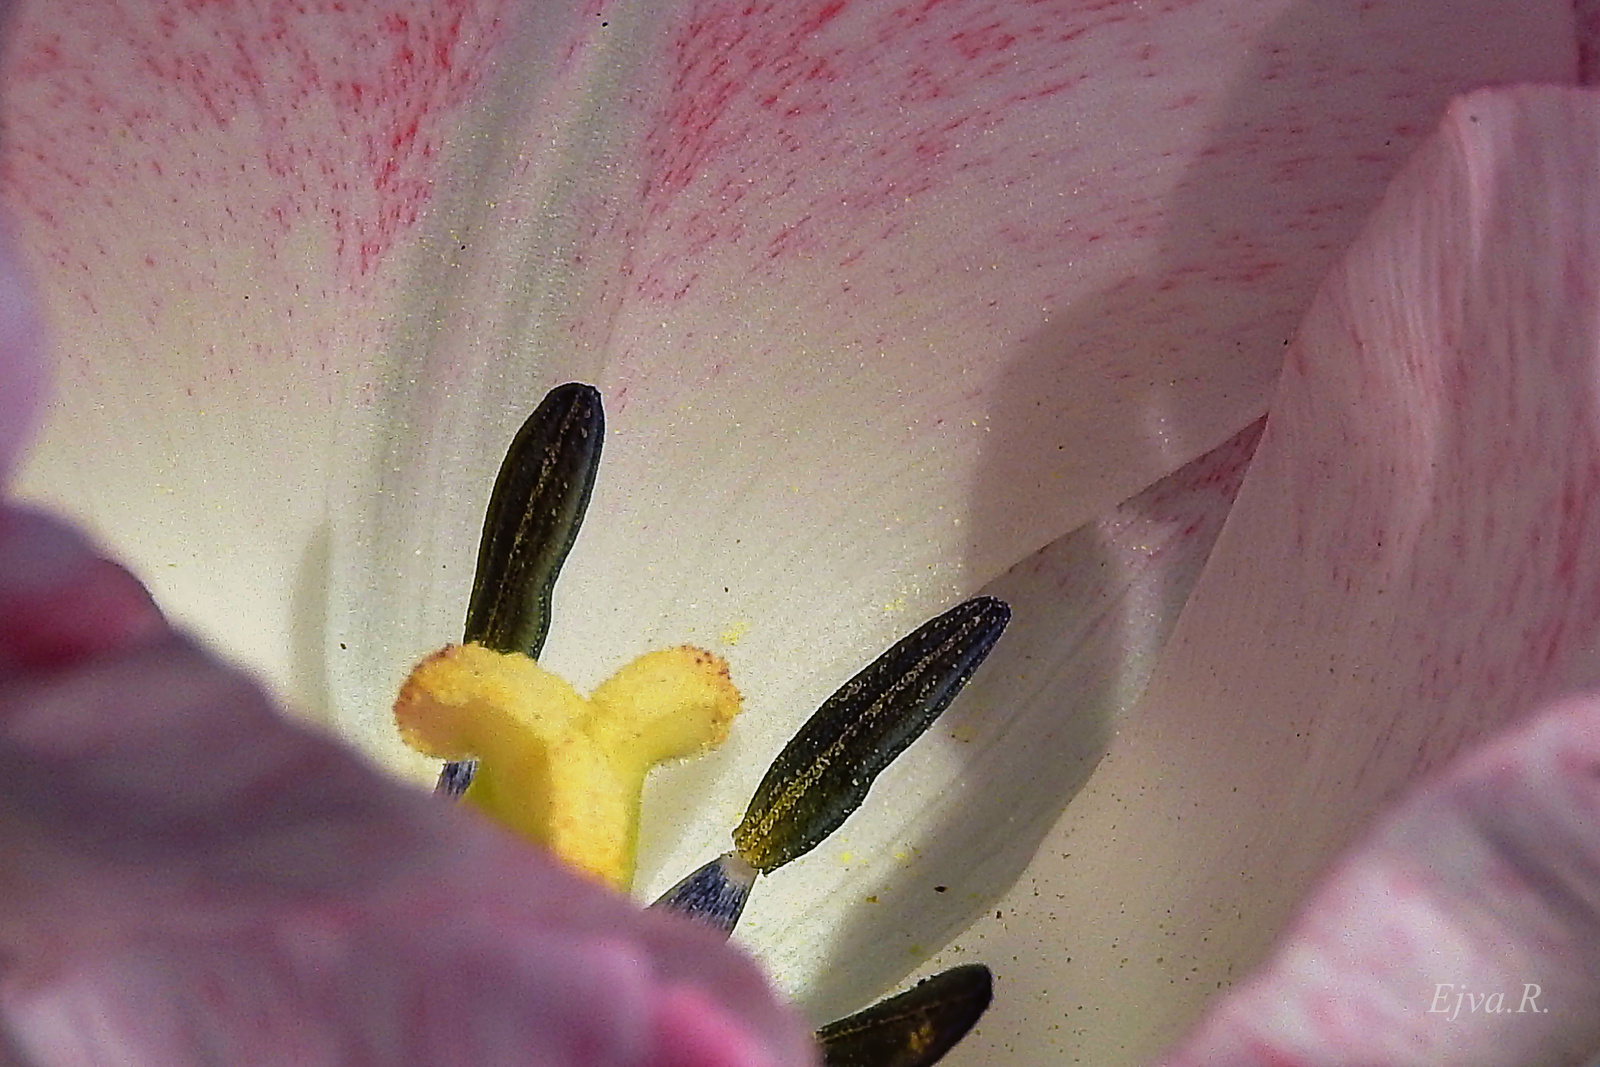 A tulipán (Tulipa)